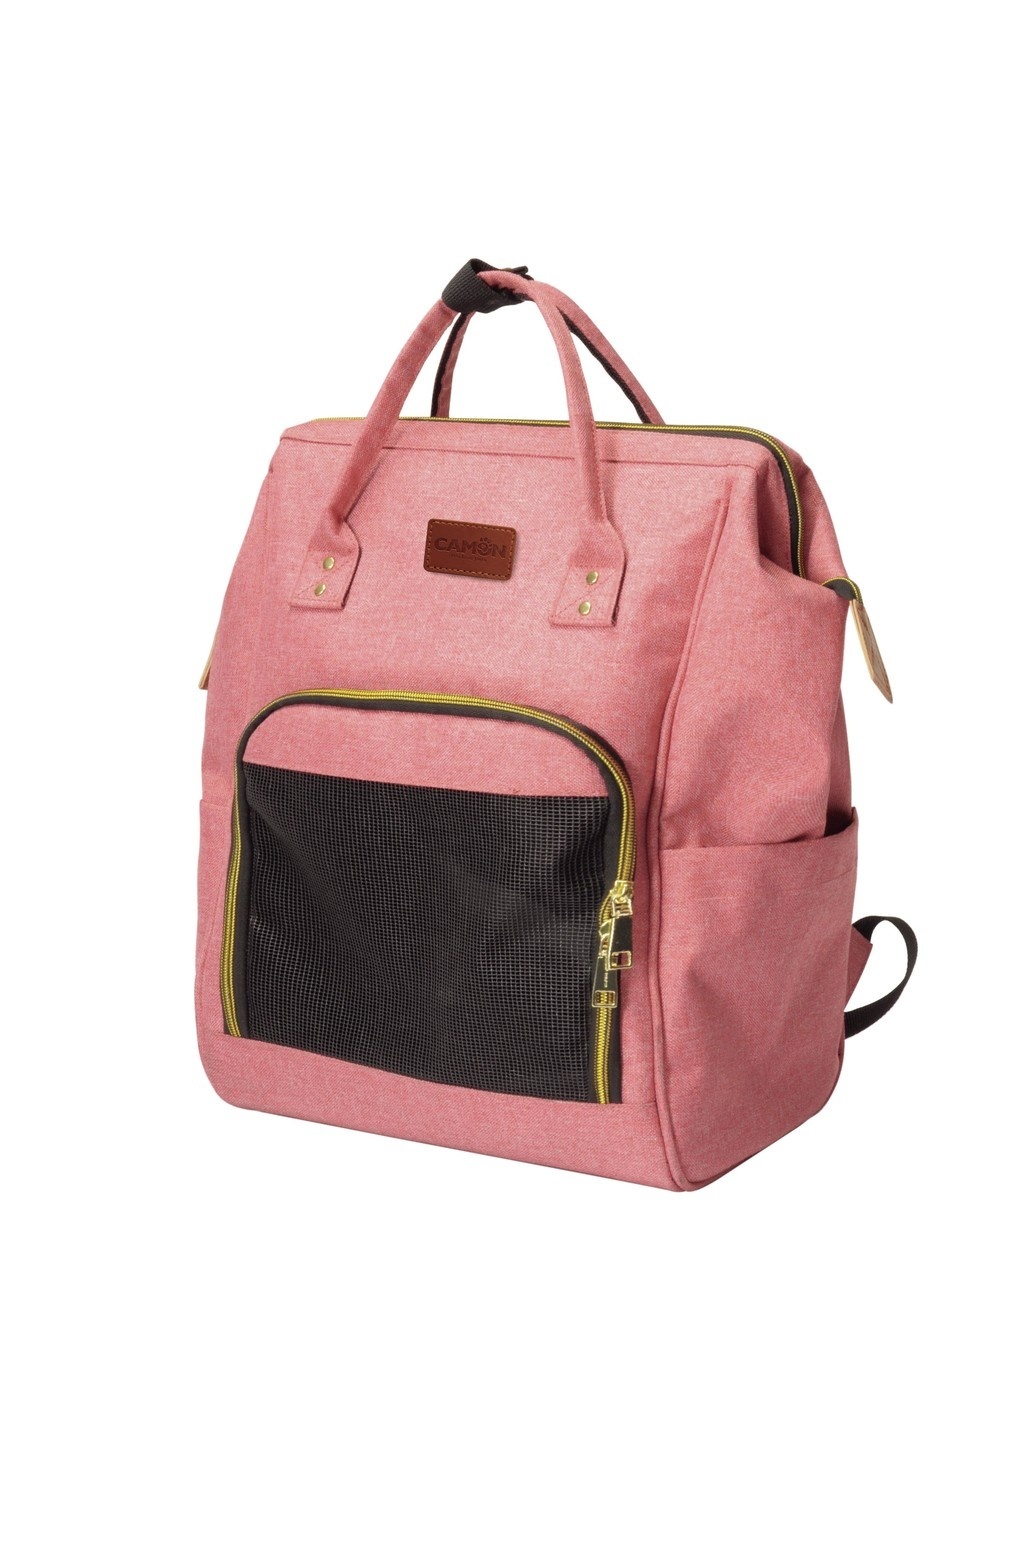 Camon Camon рюкзак-переноска Pet Fashion для животных розовый деним (30*20*43) camon camon сумка переноска для маленьких животных синяя 43 29 28 см